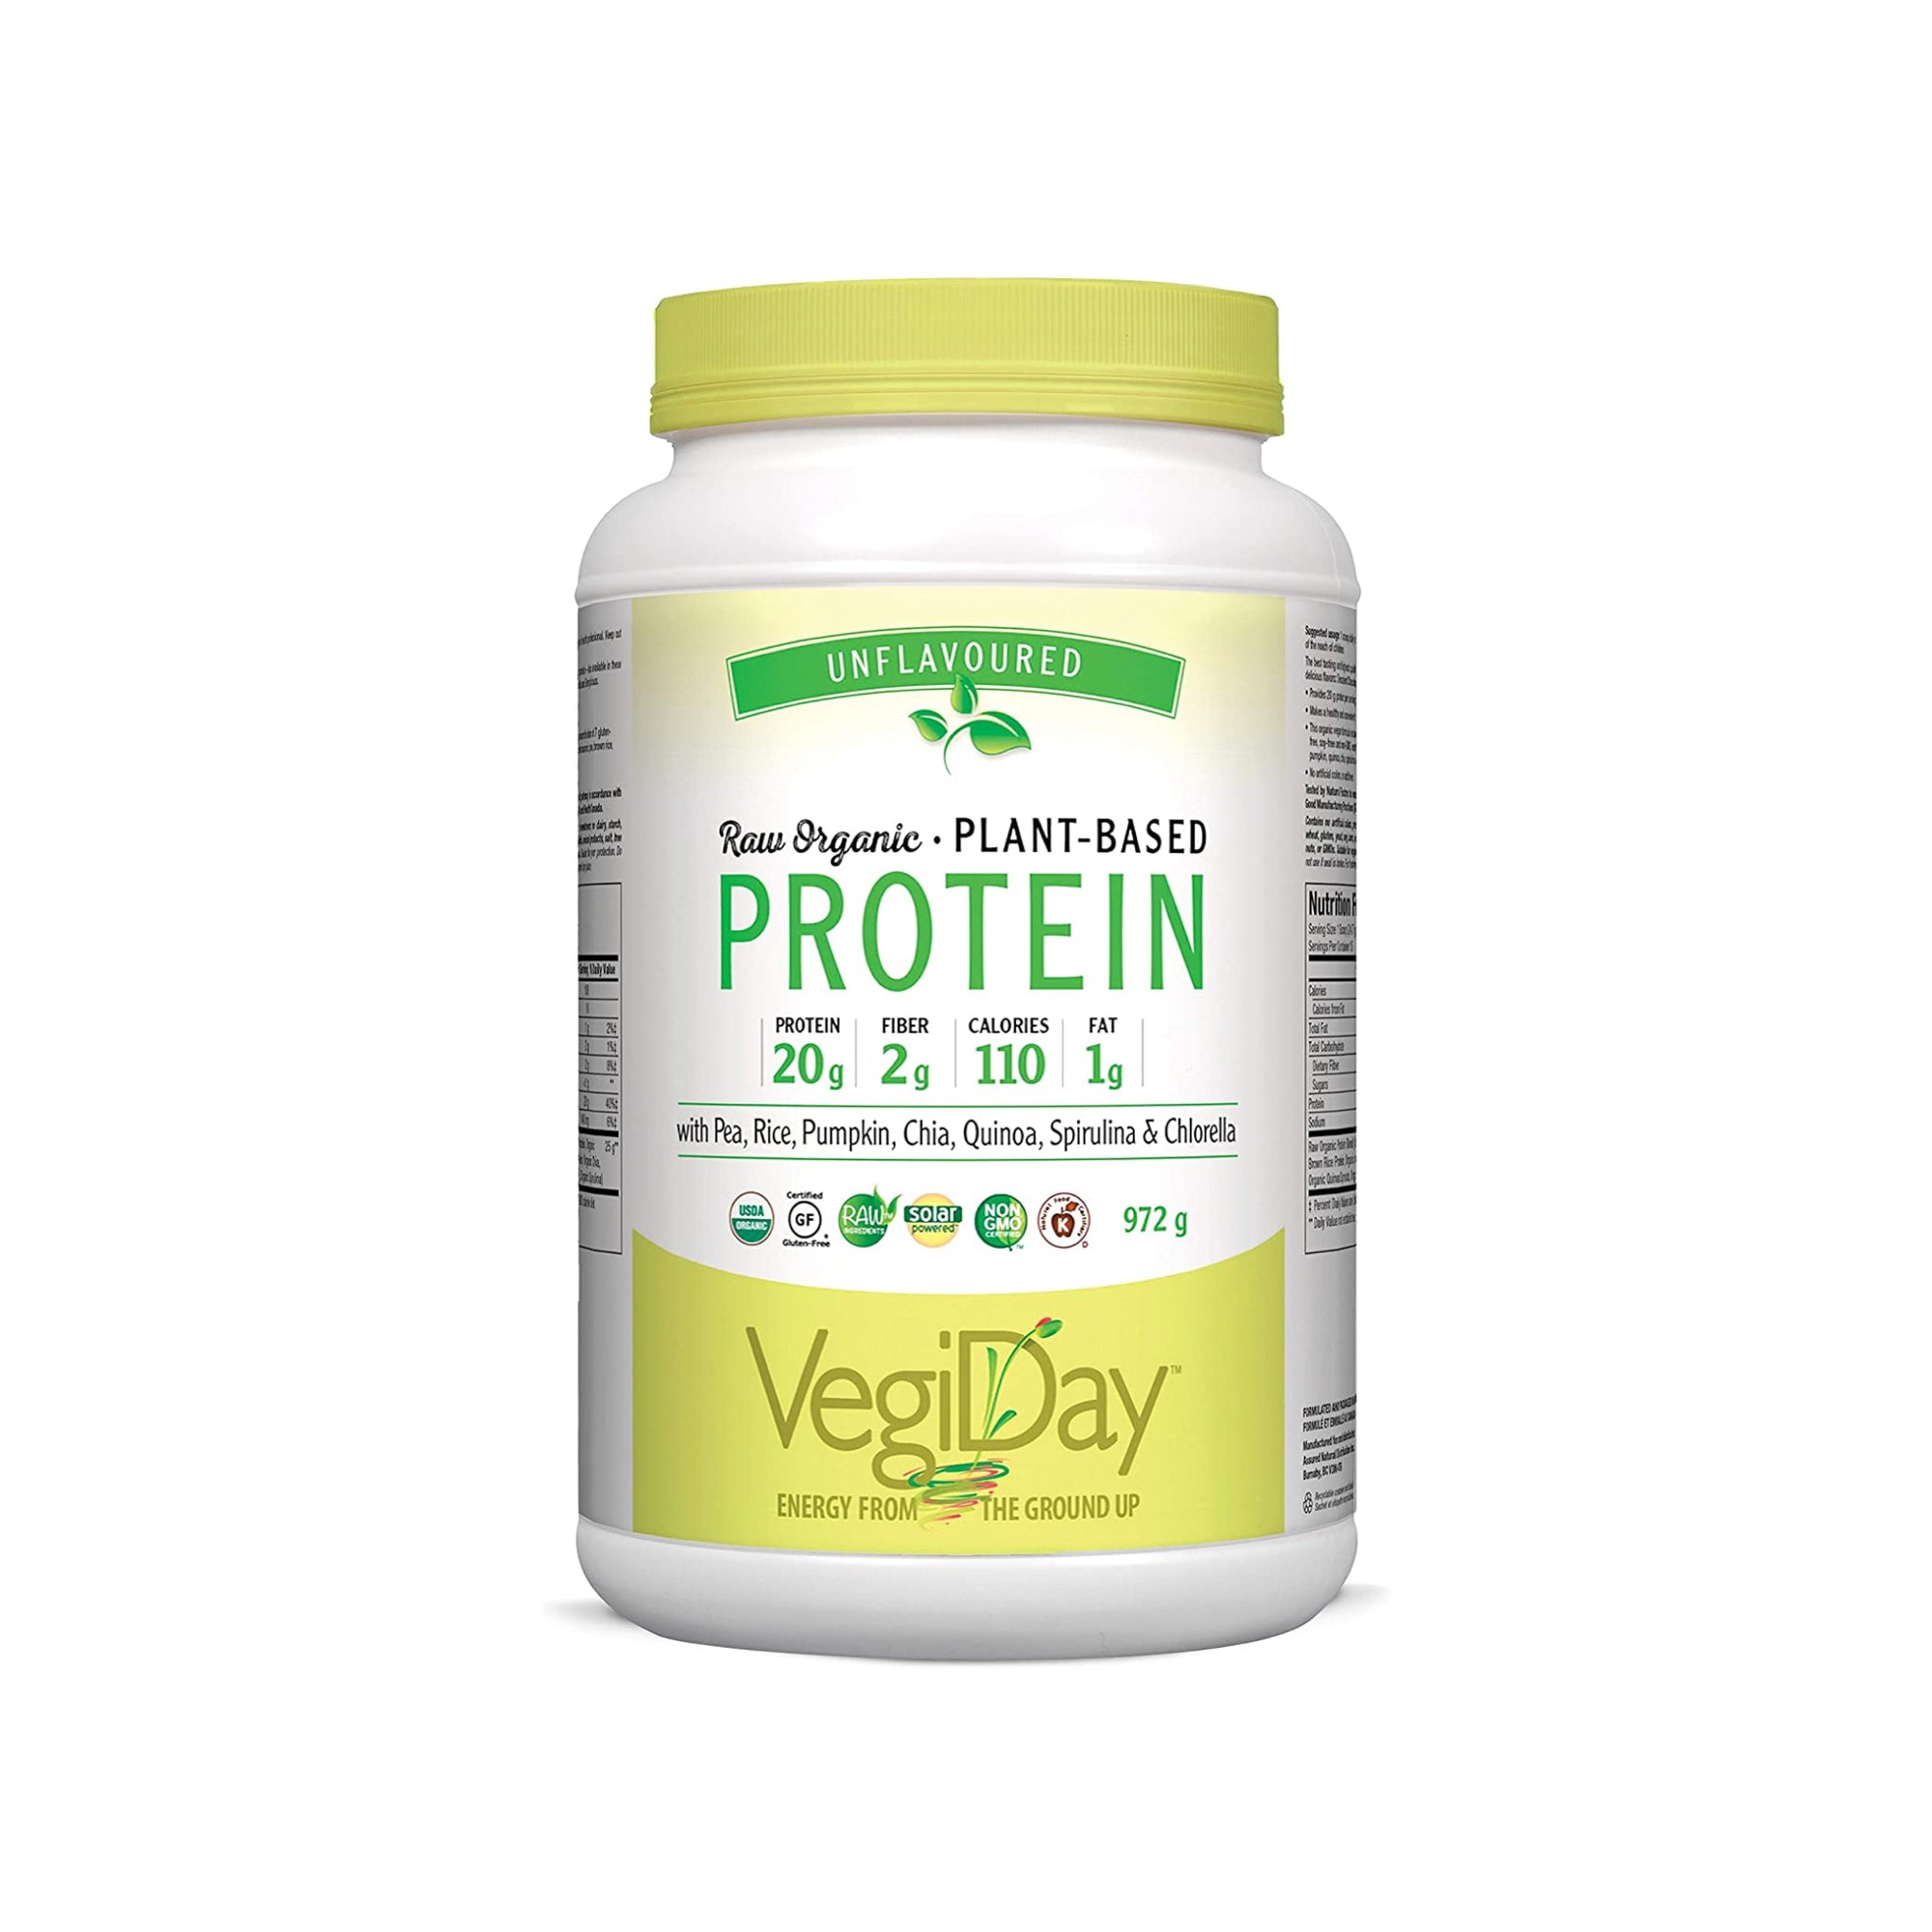 VegiDay Raw Organic Plant-Based Protein Unflavoured 741g